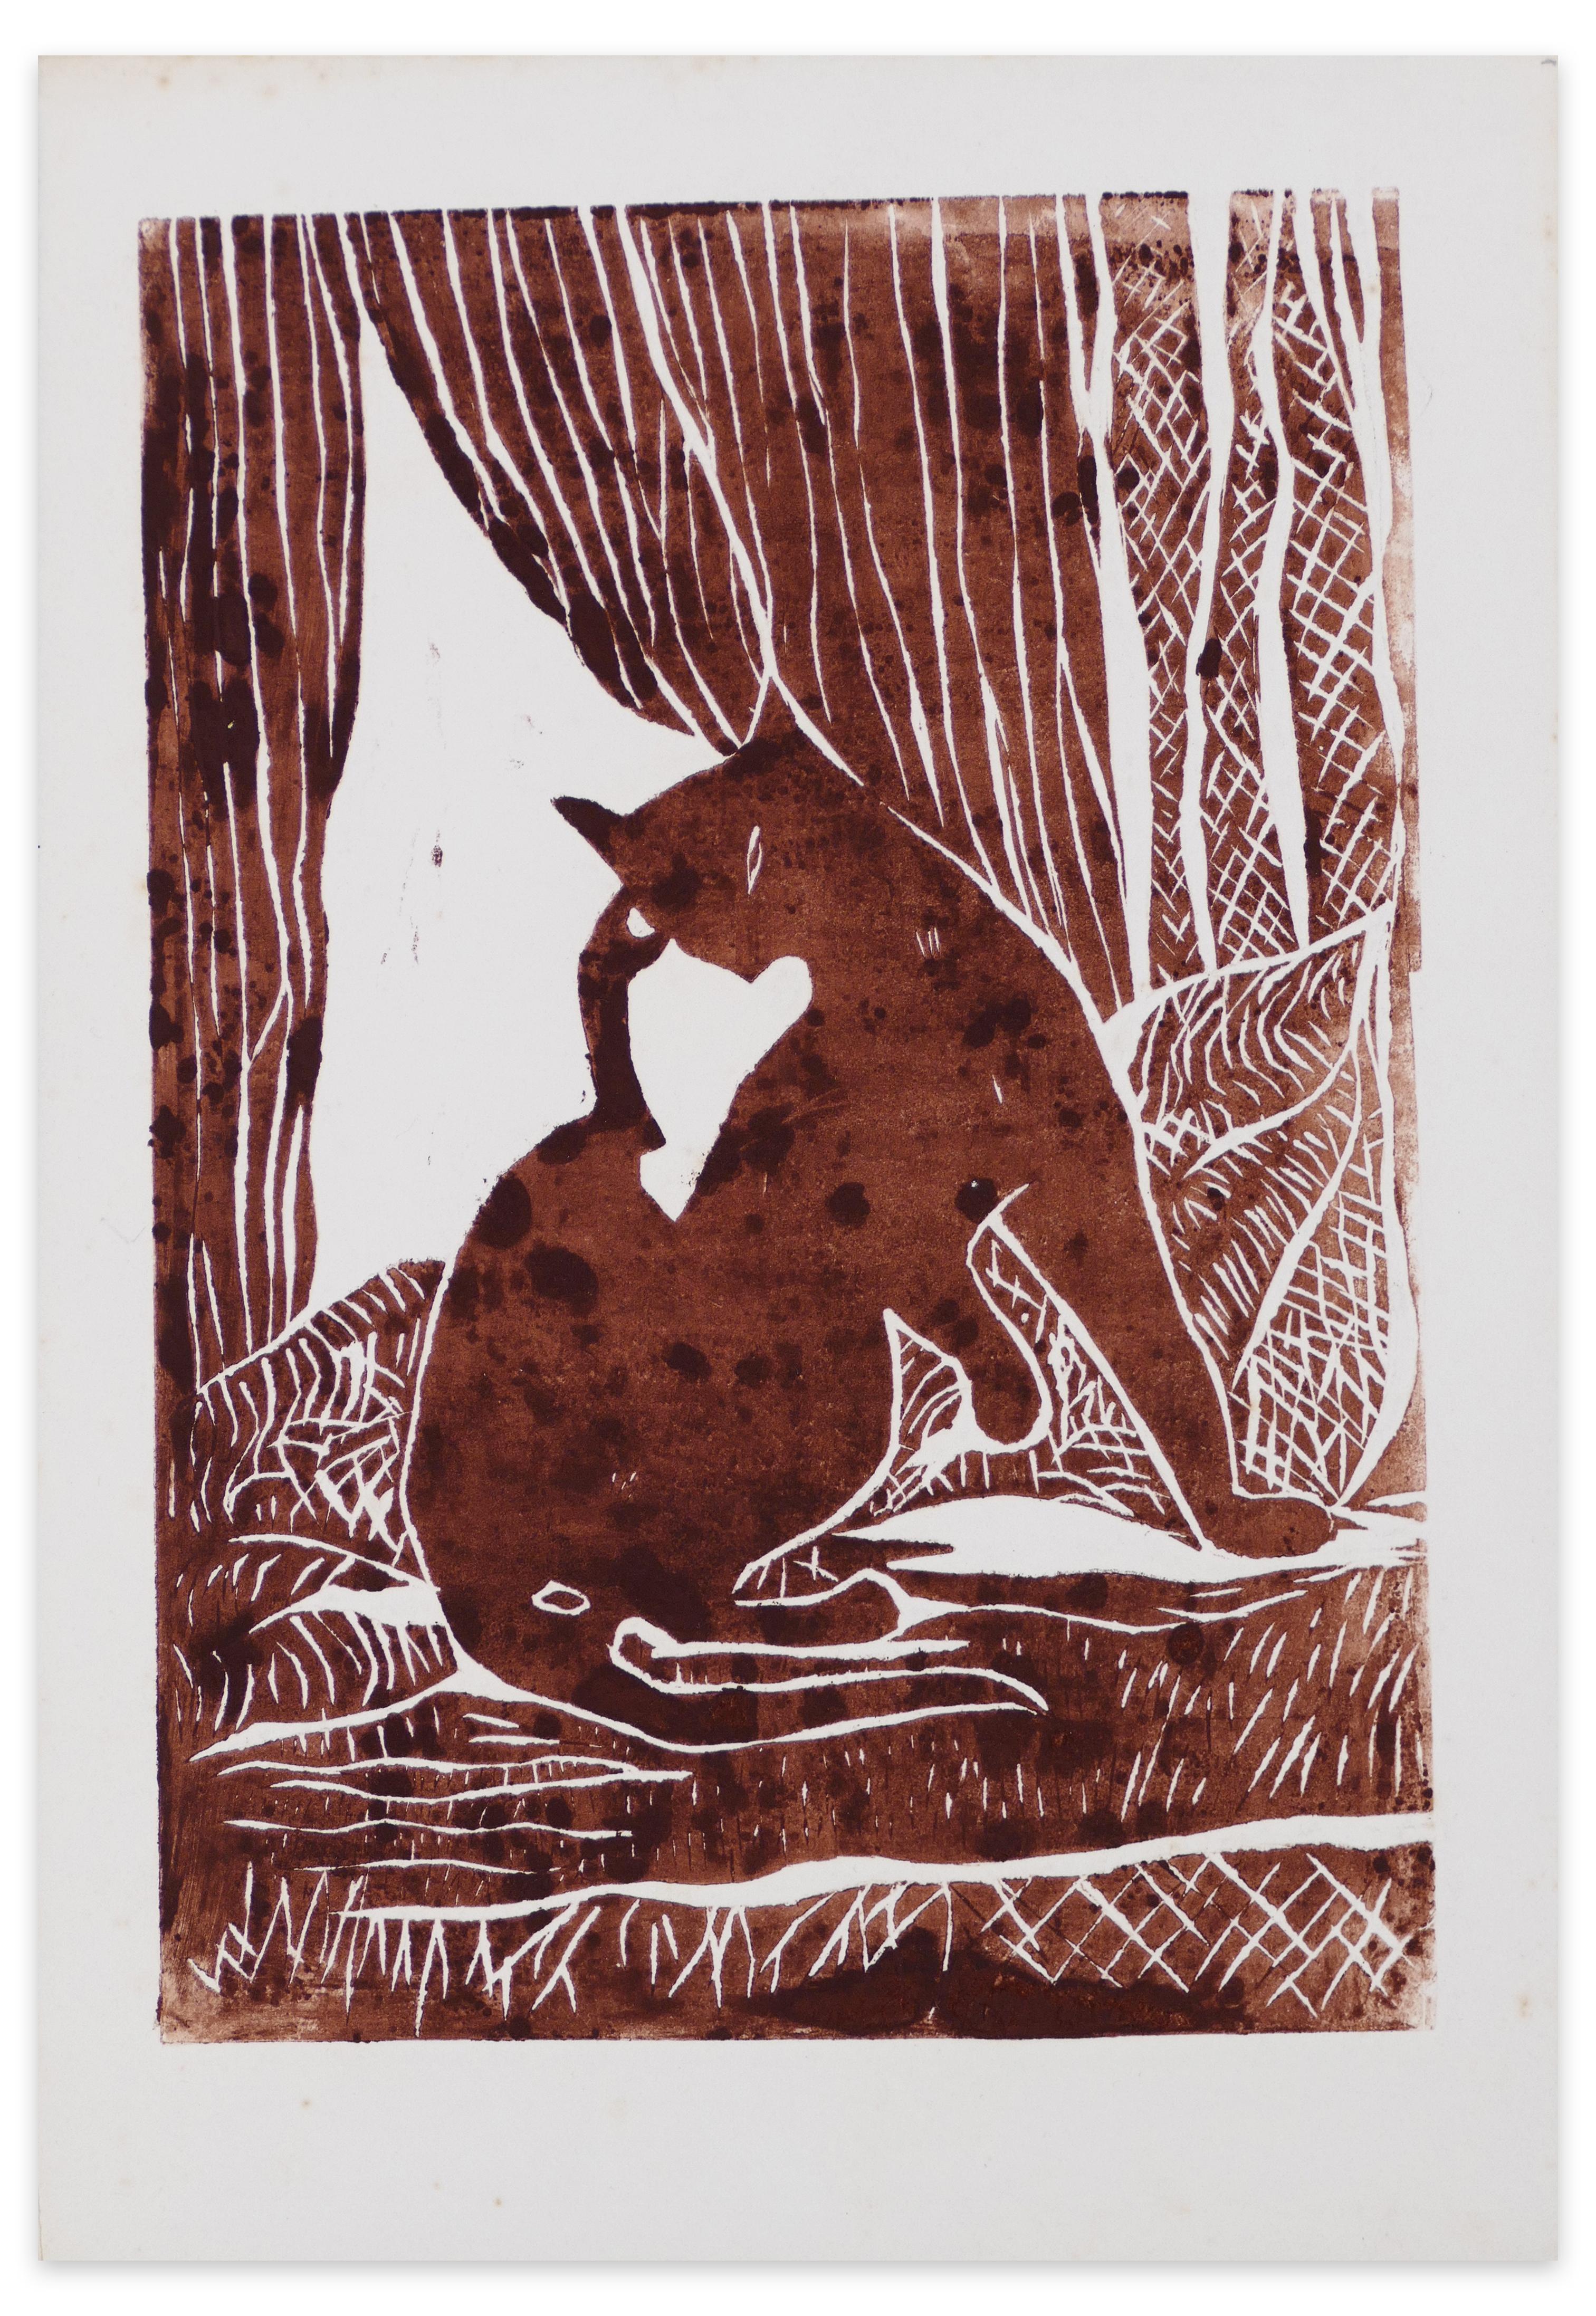 Giselle Halff Figurative Print - Le Chat (The Cat) - Original Woodcut Print by G. Halff